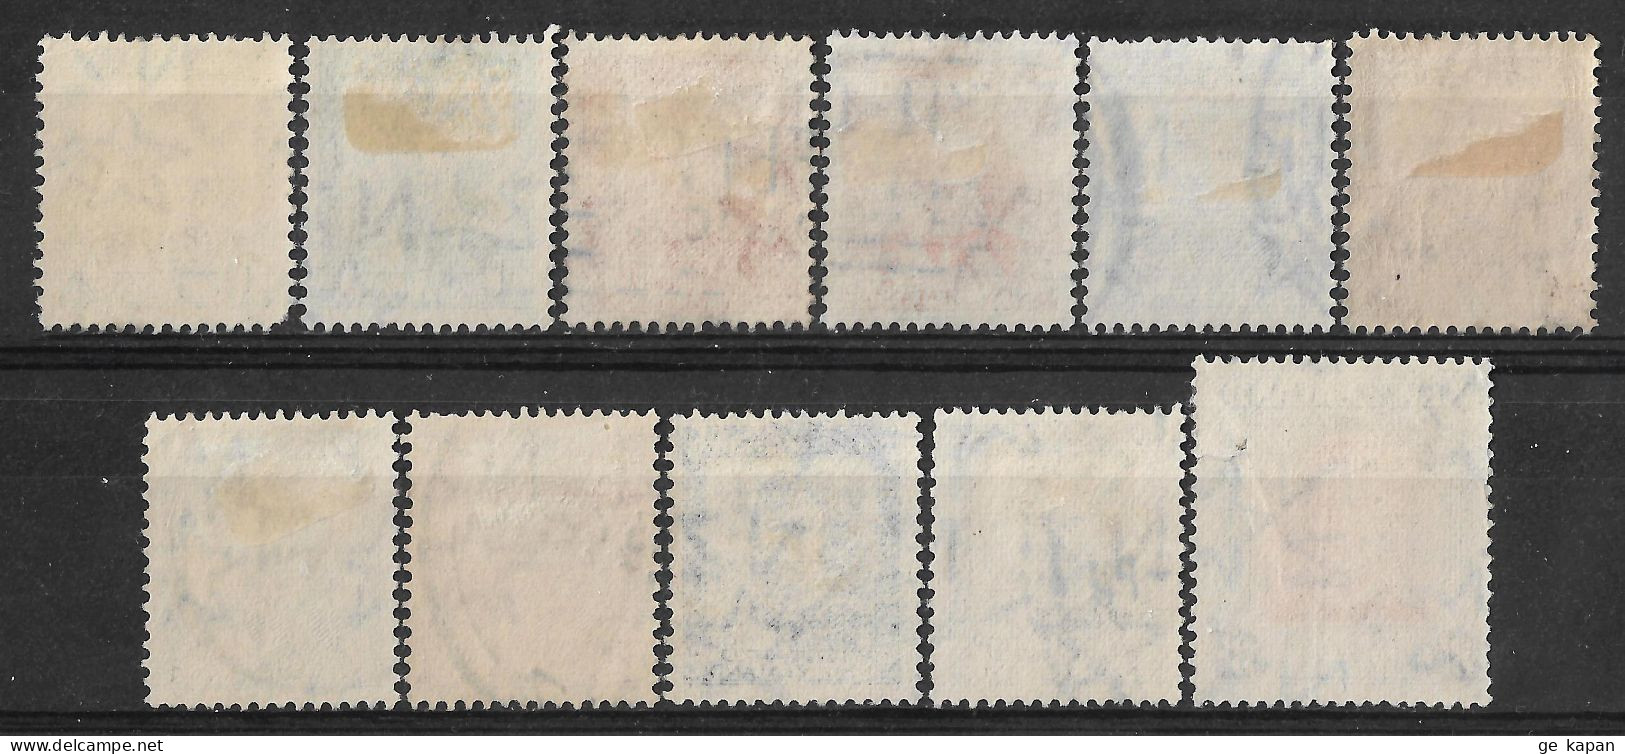 1938-1947 NEW ZEALAND Set Of 11 Used Stamps (Scott # 227A,228B,228C,258,260-264,268) CV $4.40 - Usados